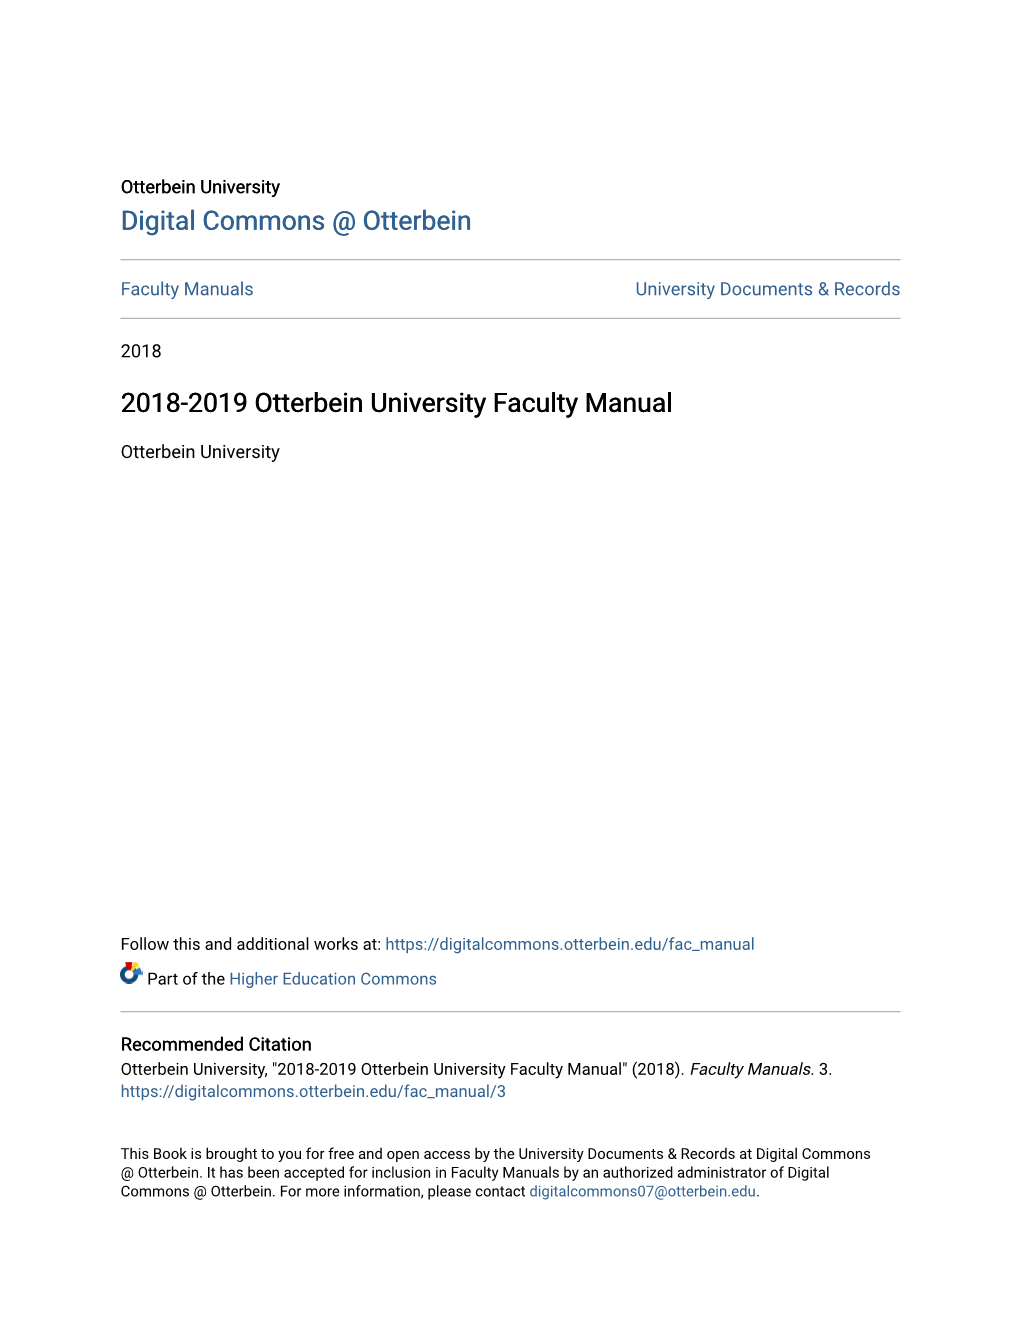 2018-2019 Otterbein University Faculty Manual